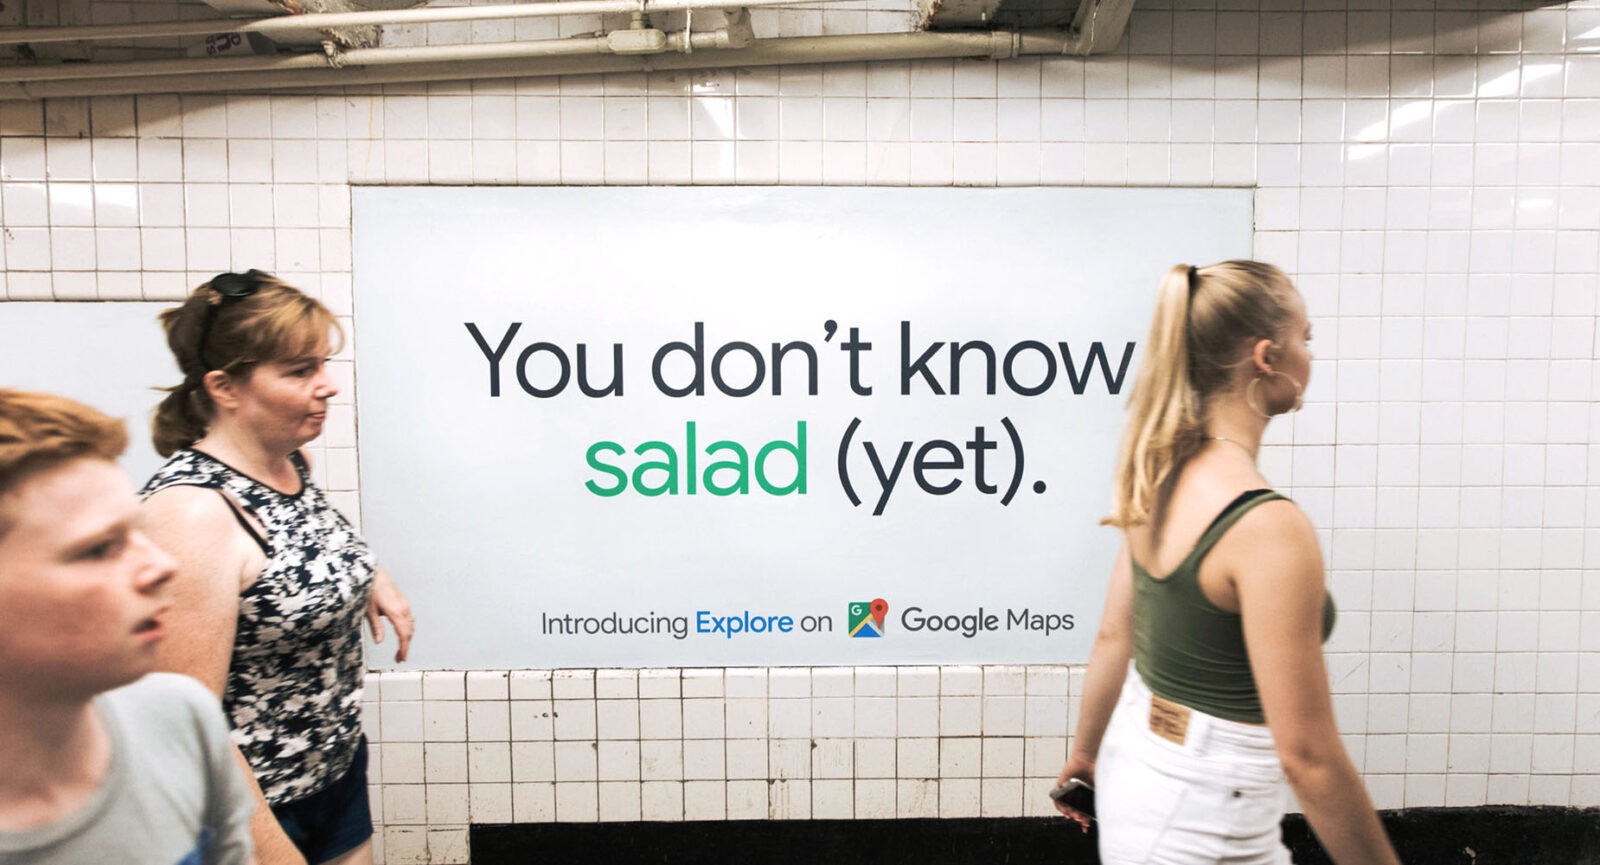 JT_GoogleMaps_Subway_ydk-Salad